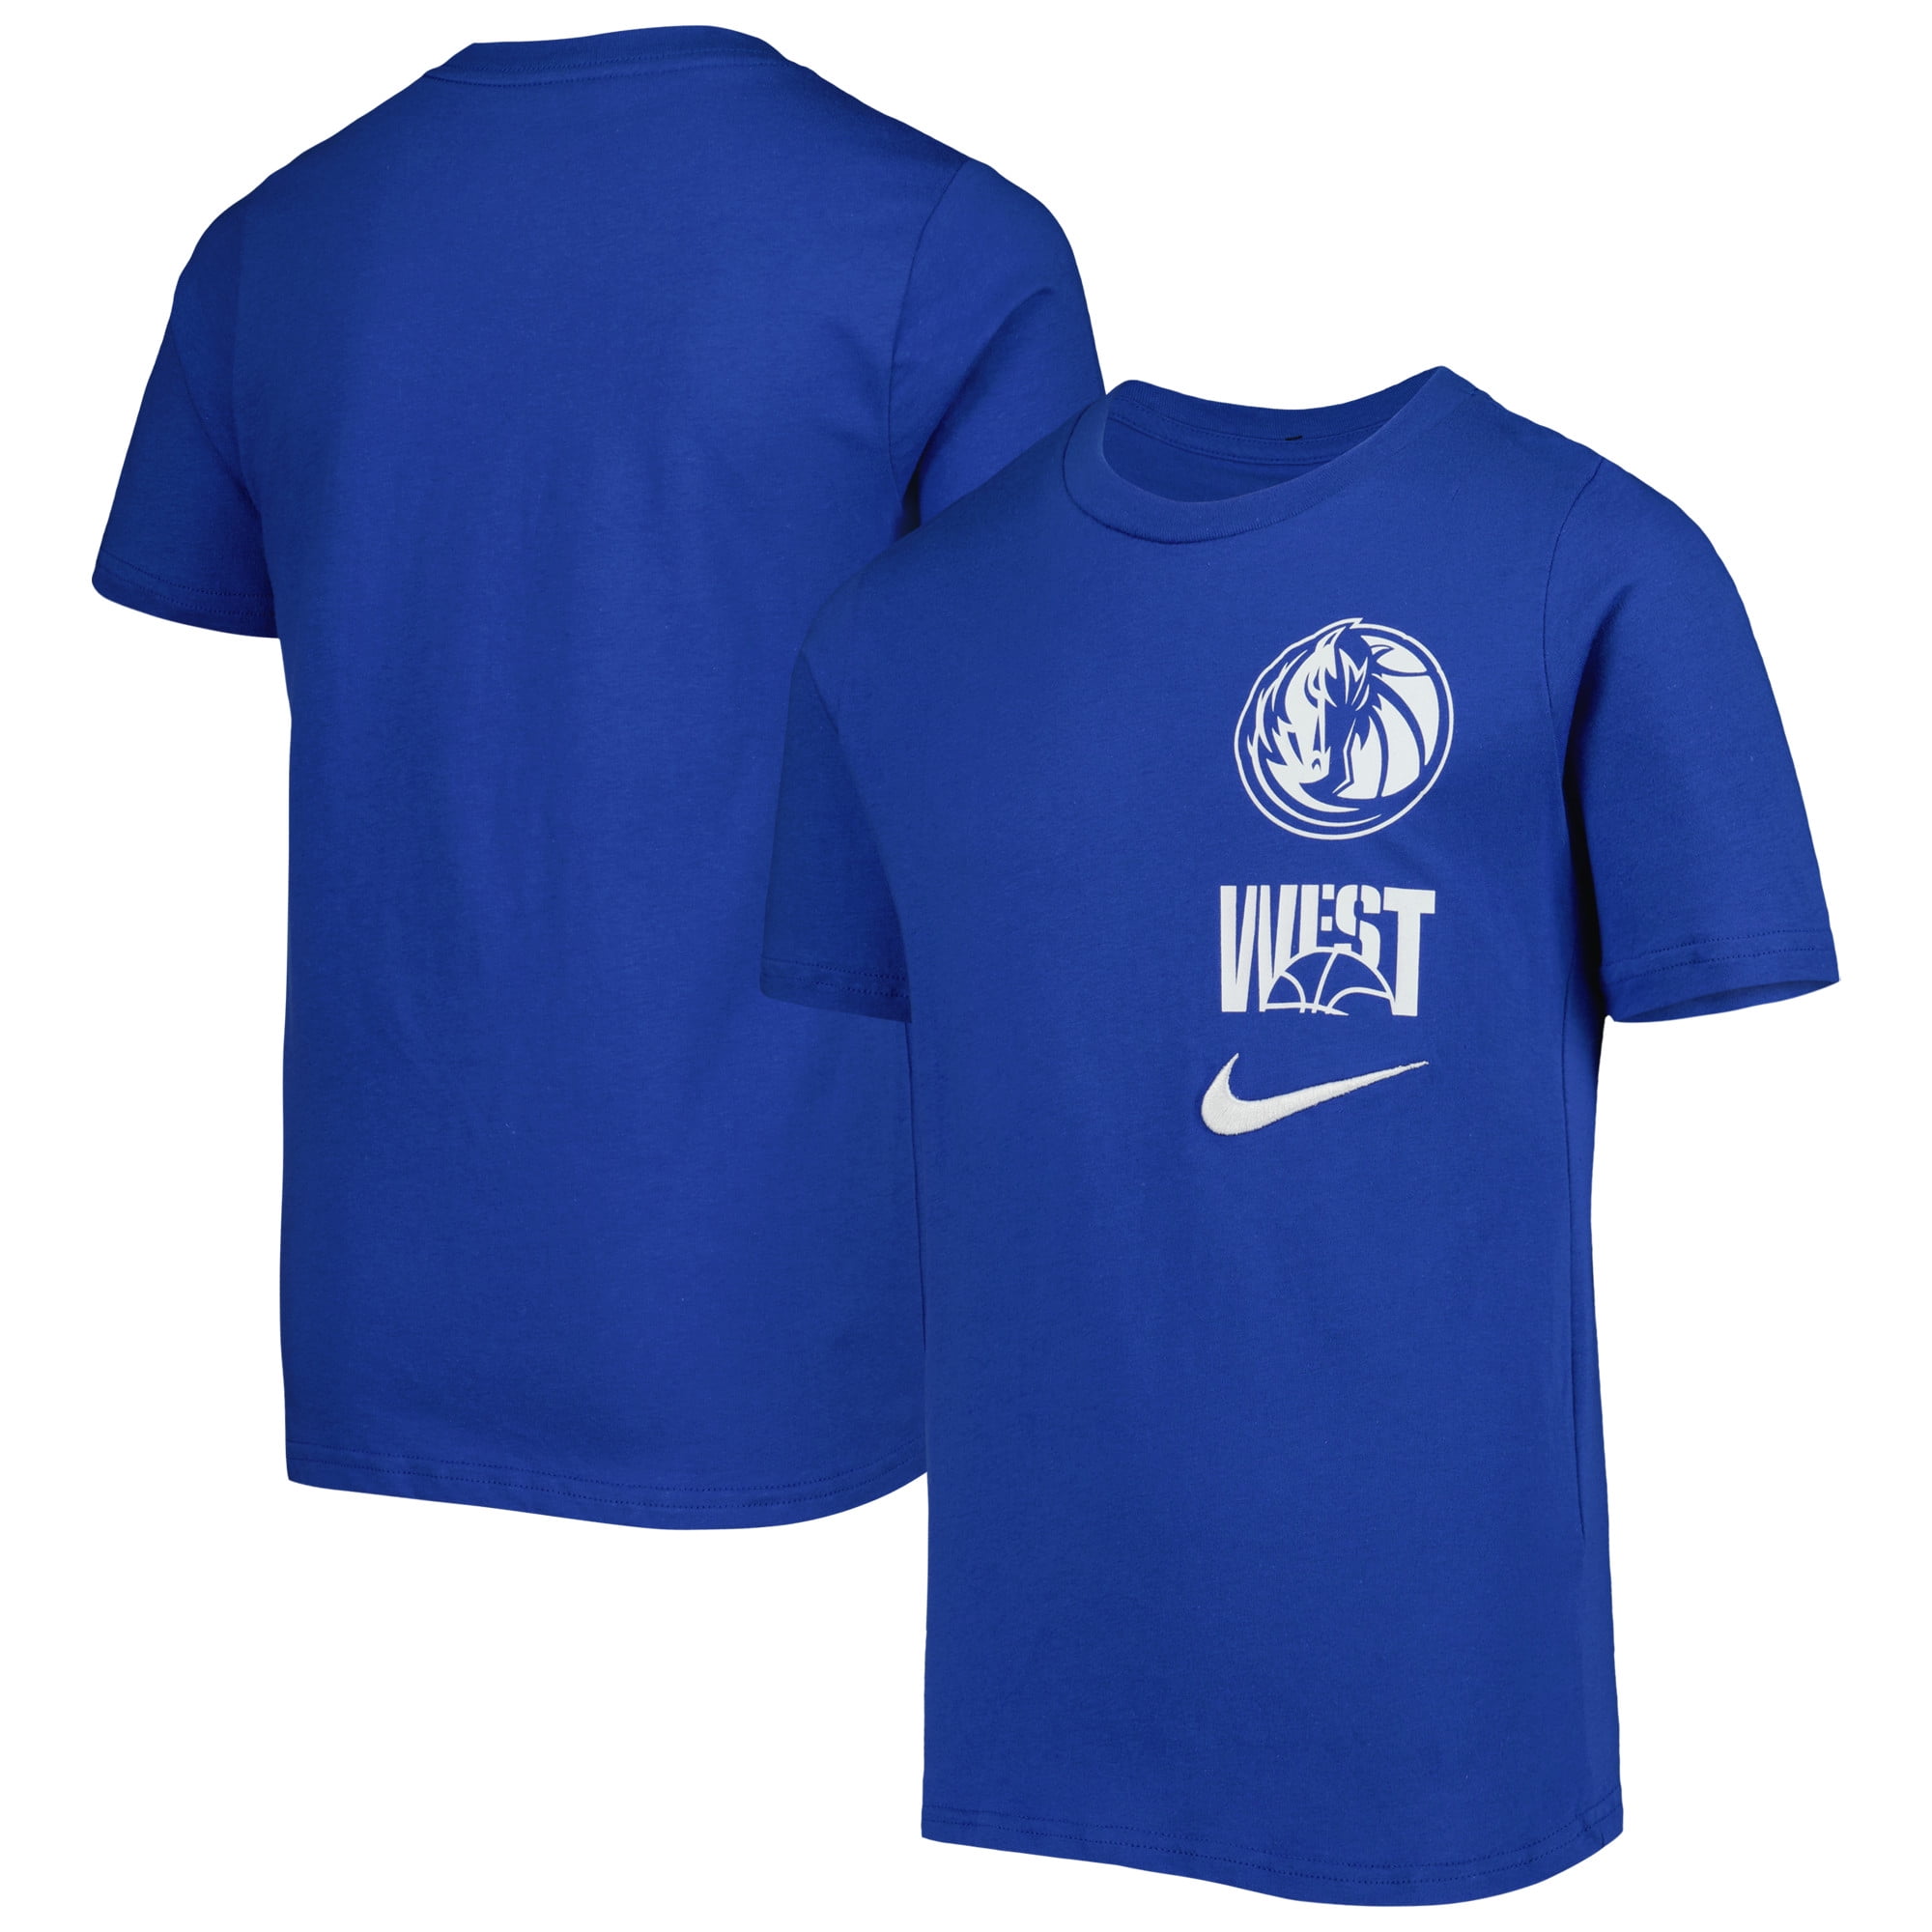 Youth Nike Royal Dallas Mavericks Vs Block Essential T-Shirt 